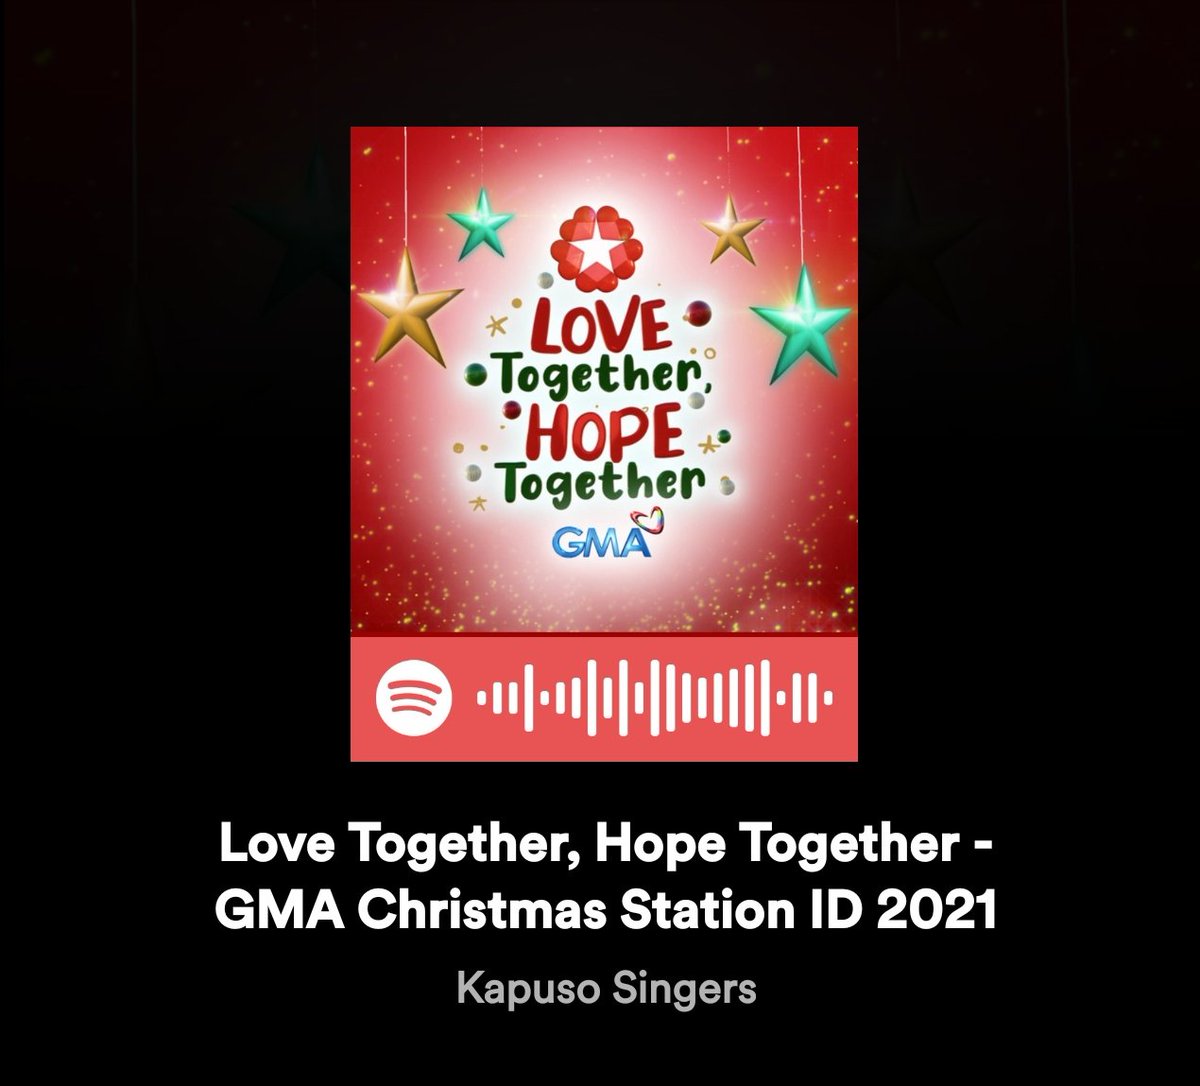 Kailangan may Love and Hope....
#Kapuso
#LoveTogetherHopeTogether
#GMAChristmasStationID2021
#GMACSID2021